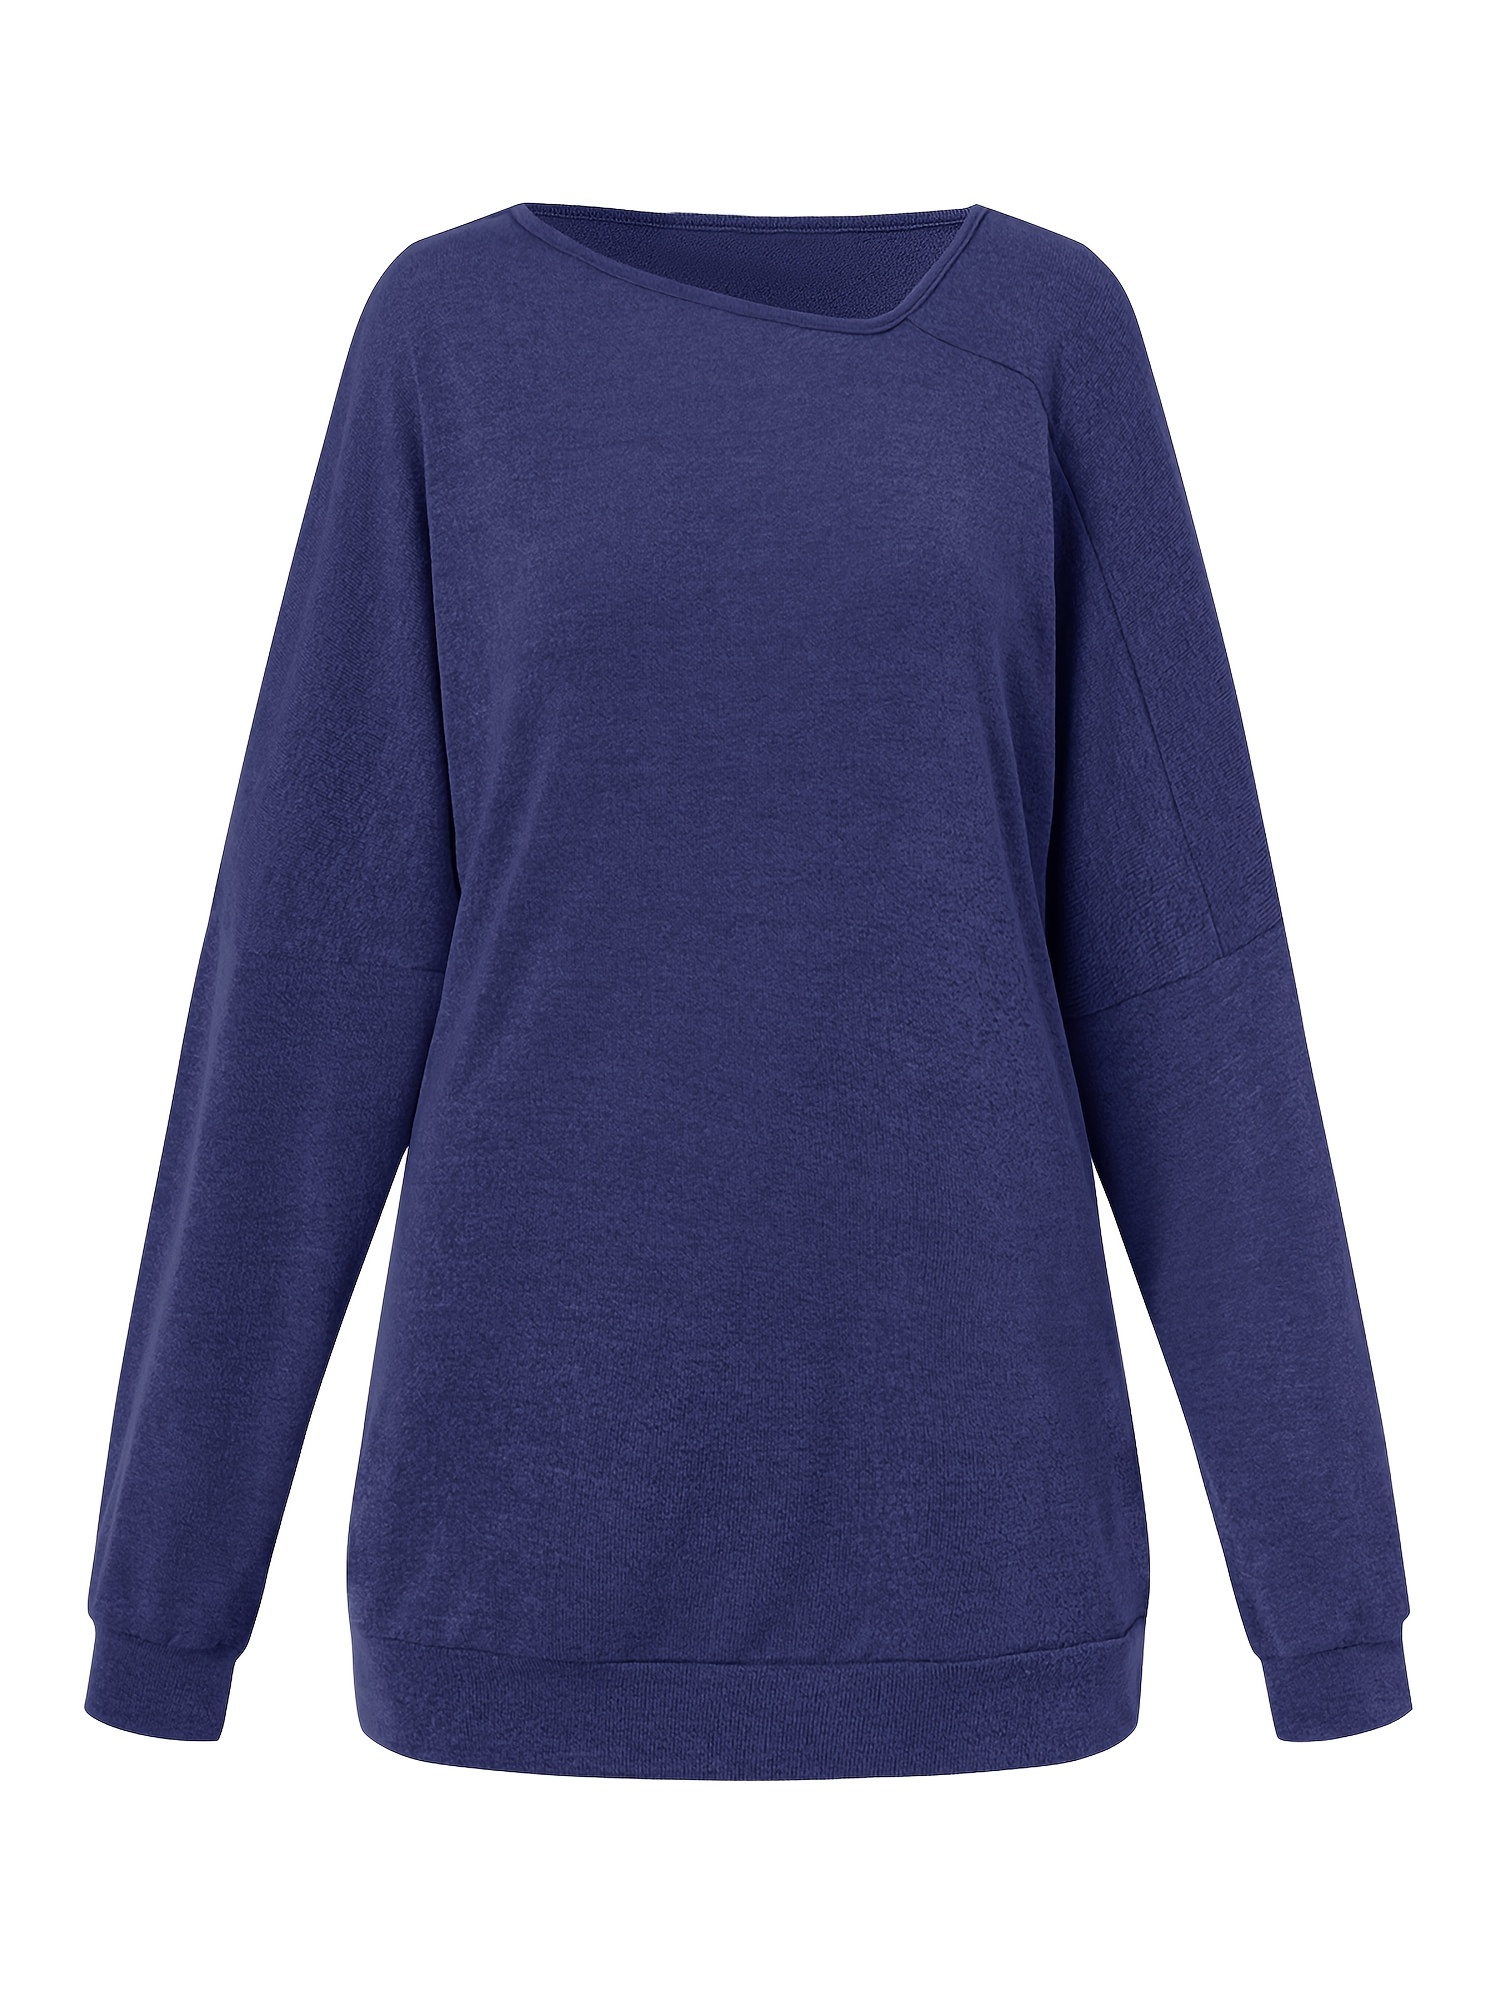 Solid Asymmetrical Neck Sweatshirt, Casual Long Sleeve Drop